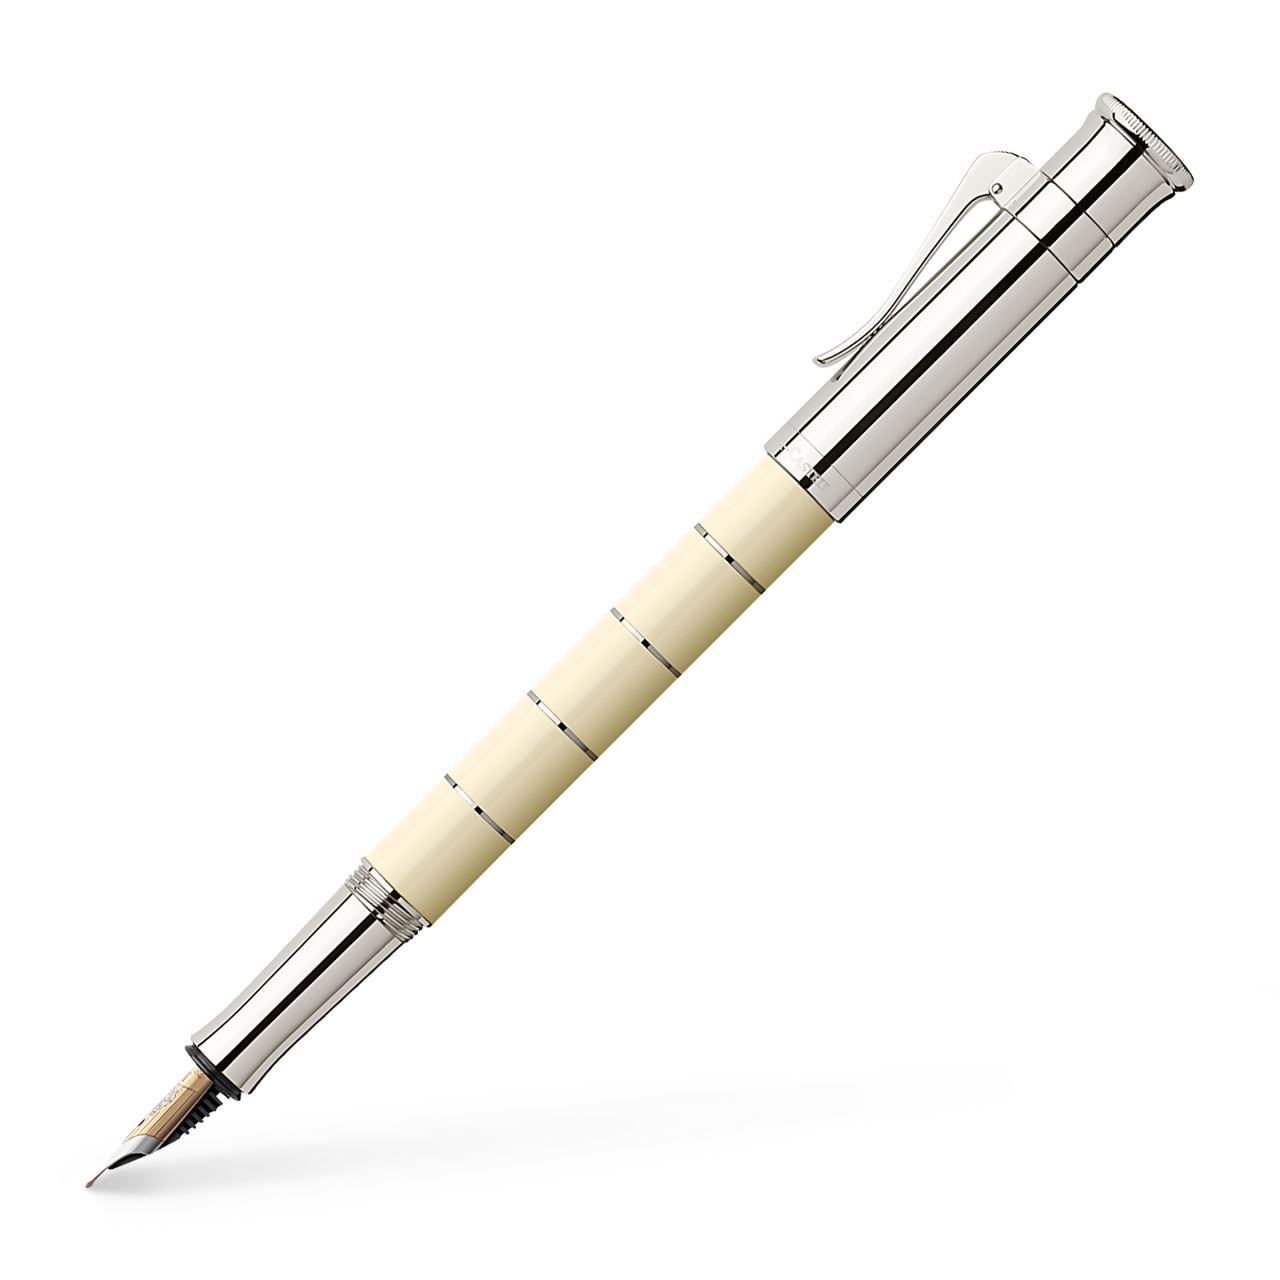 Graf-von-Faber-Castell - Fountain pen Classic Anello Ivory EF